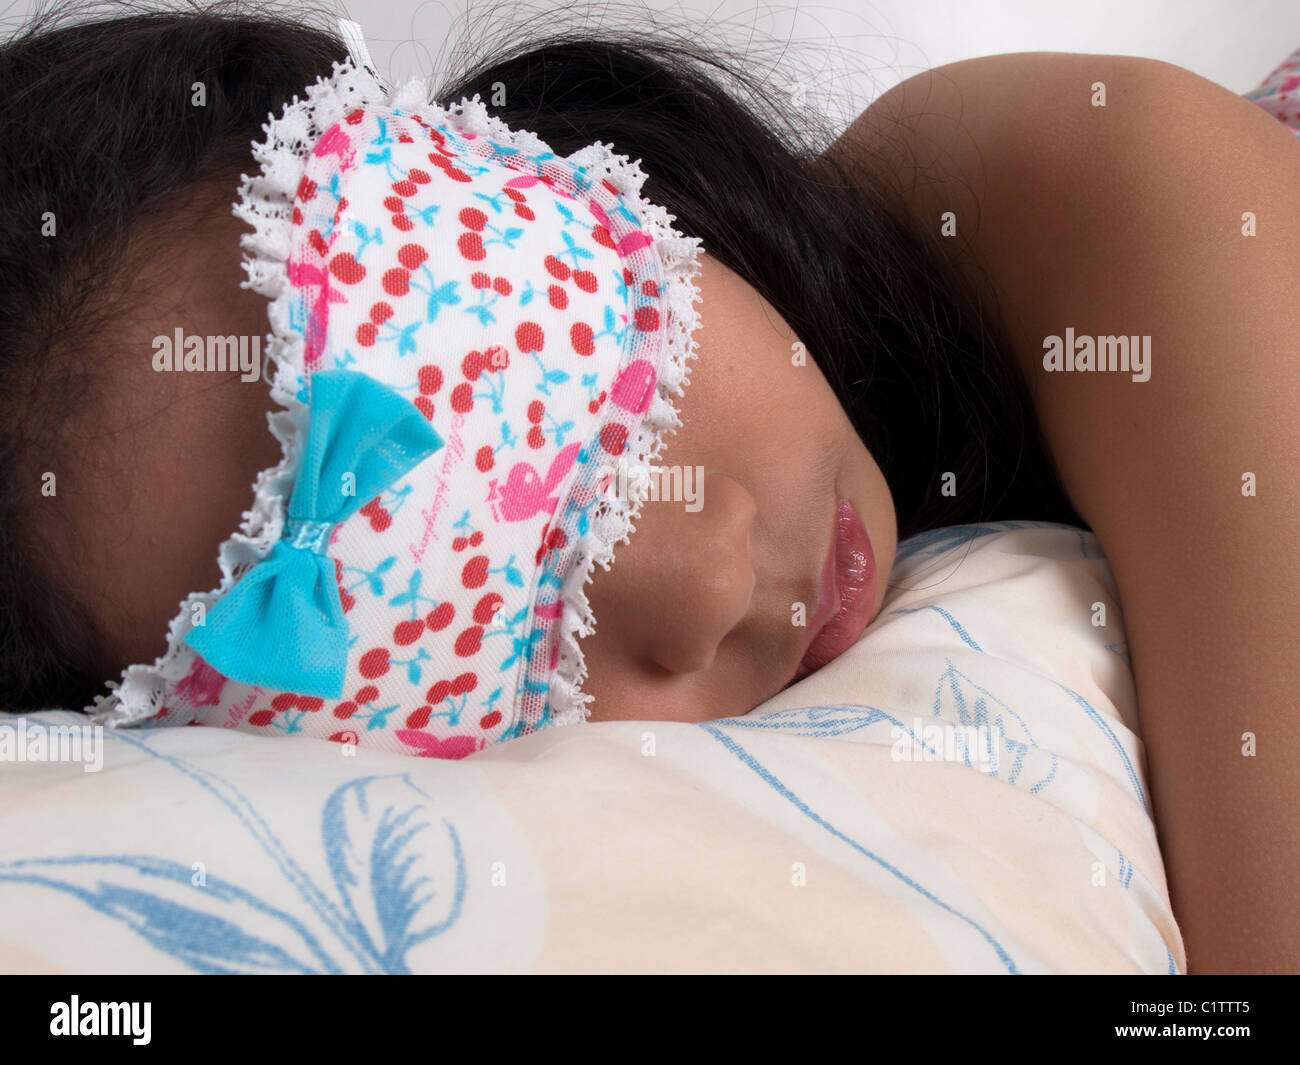 A teenage girl sleeping with a sleeping mask on. Stock Photo